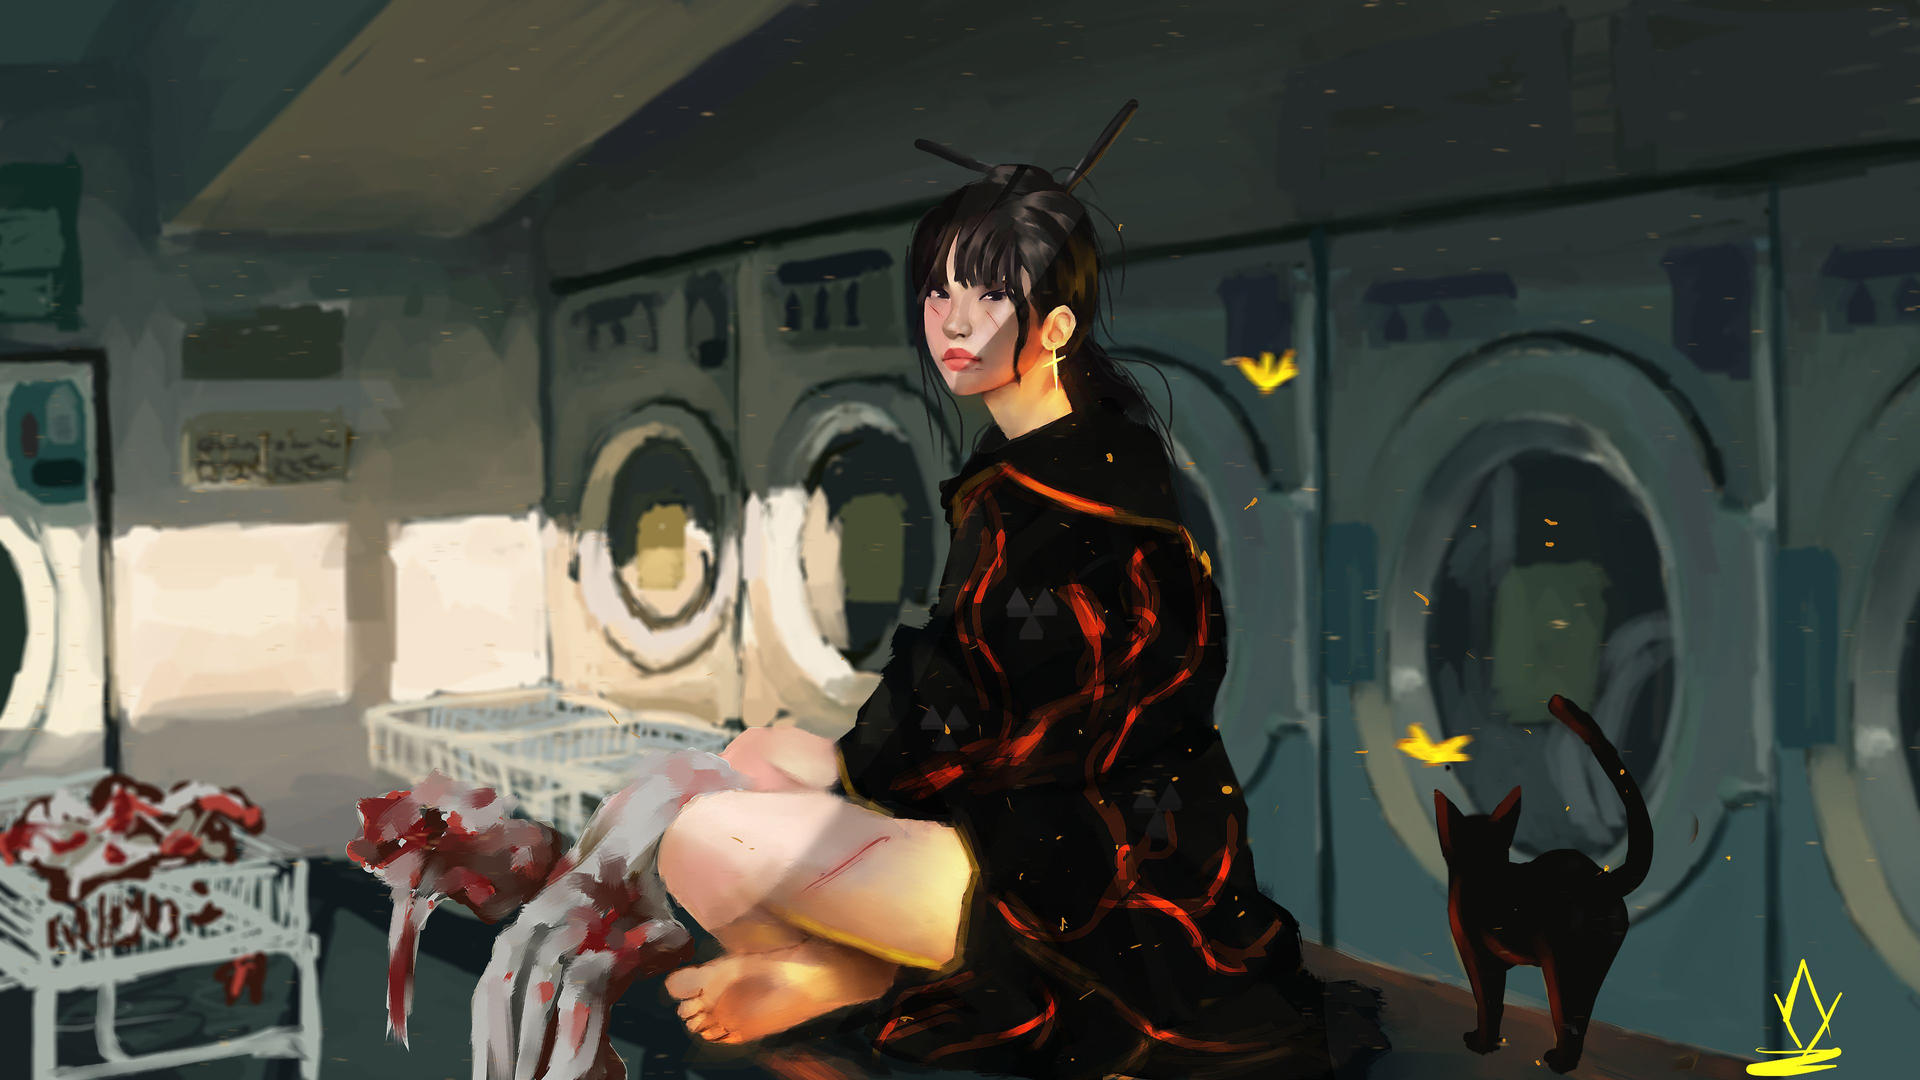 Artwork Women Asian DeviantArt Women Indoors Dark Hair Washing Machine Laundry Looking At Viewer Cat 1920x1080